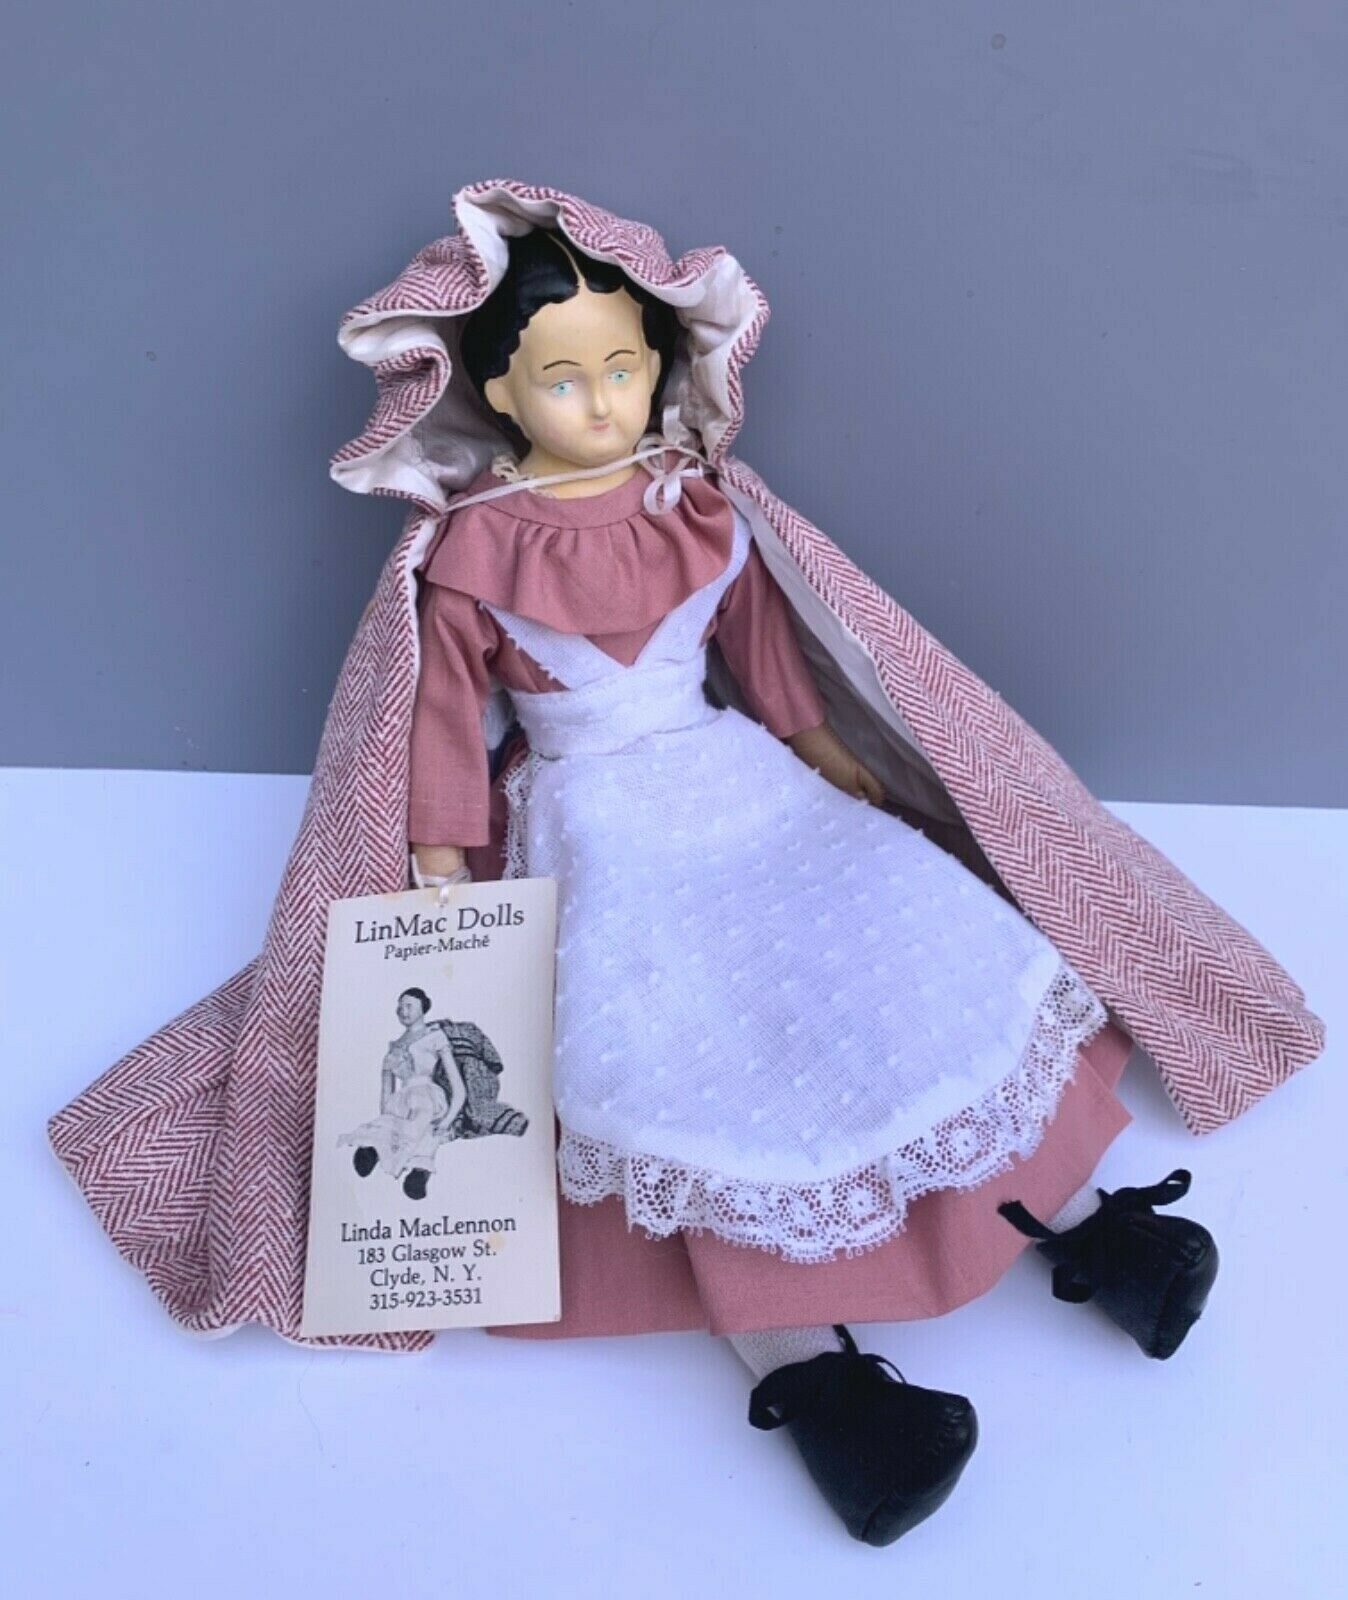 Linda Maclennon Reproduction Doll 12" Tall Vintage Linmac Dolls 1986 Paper-mache